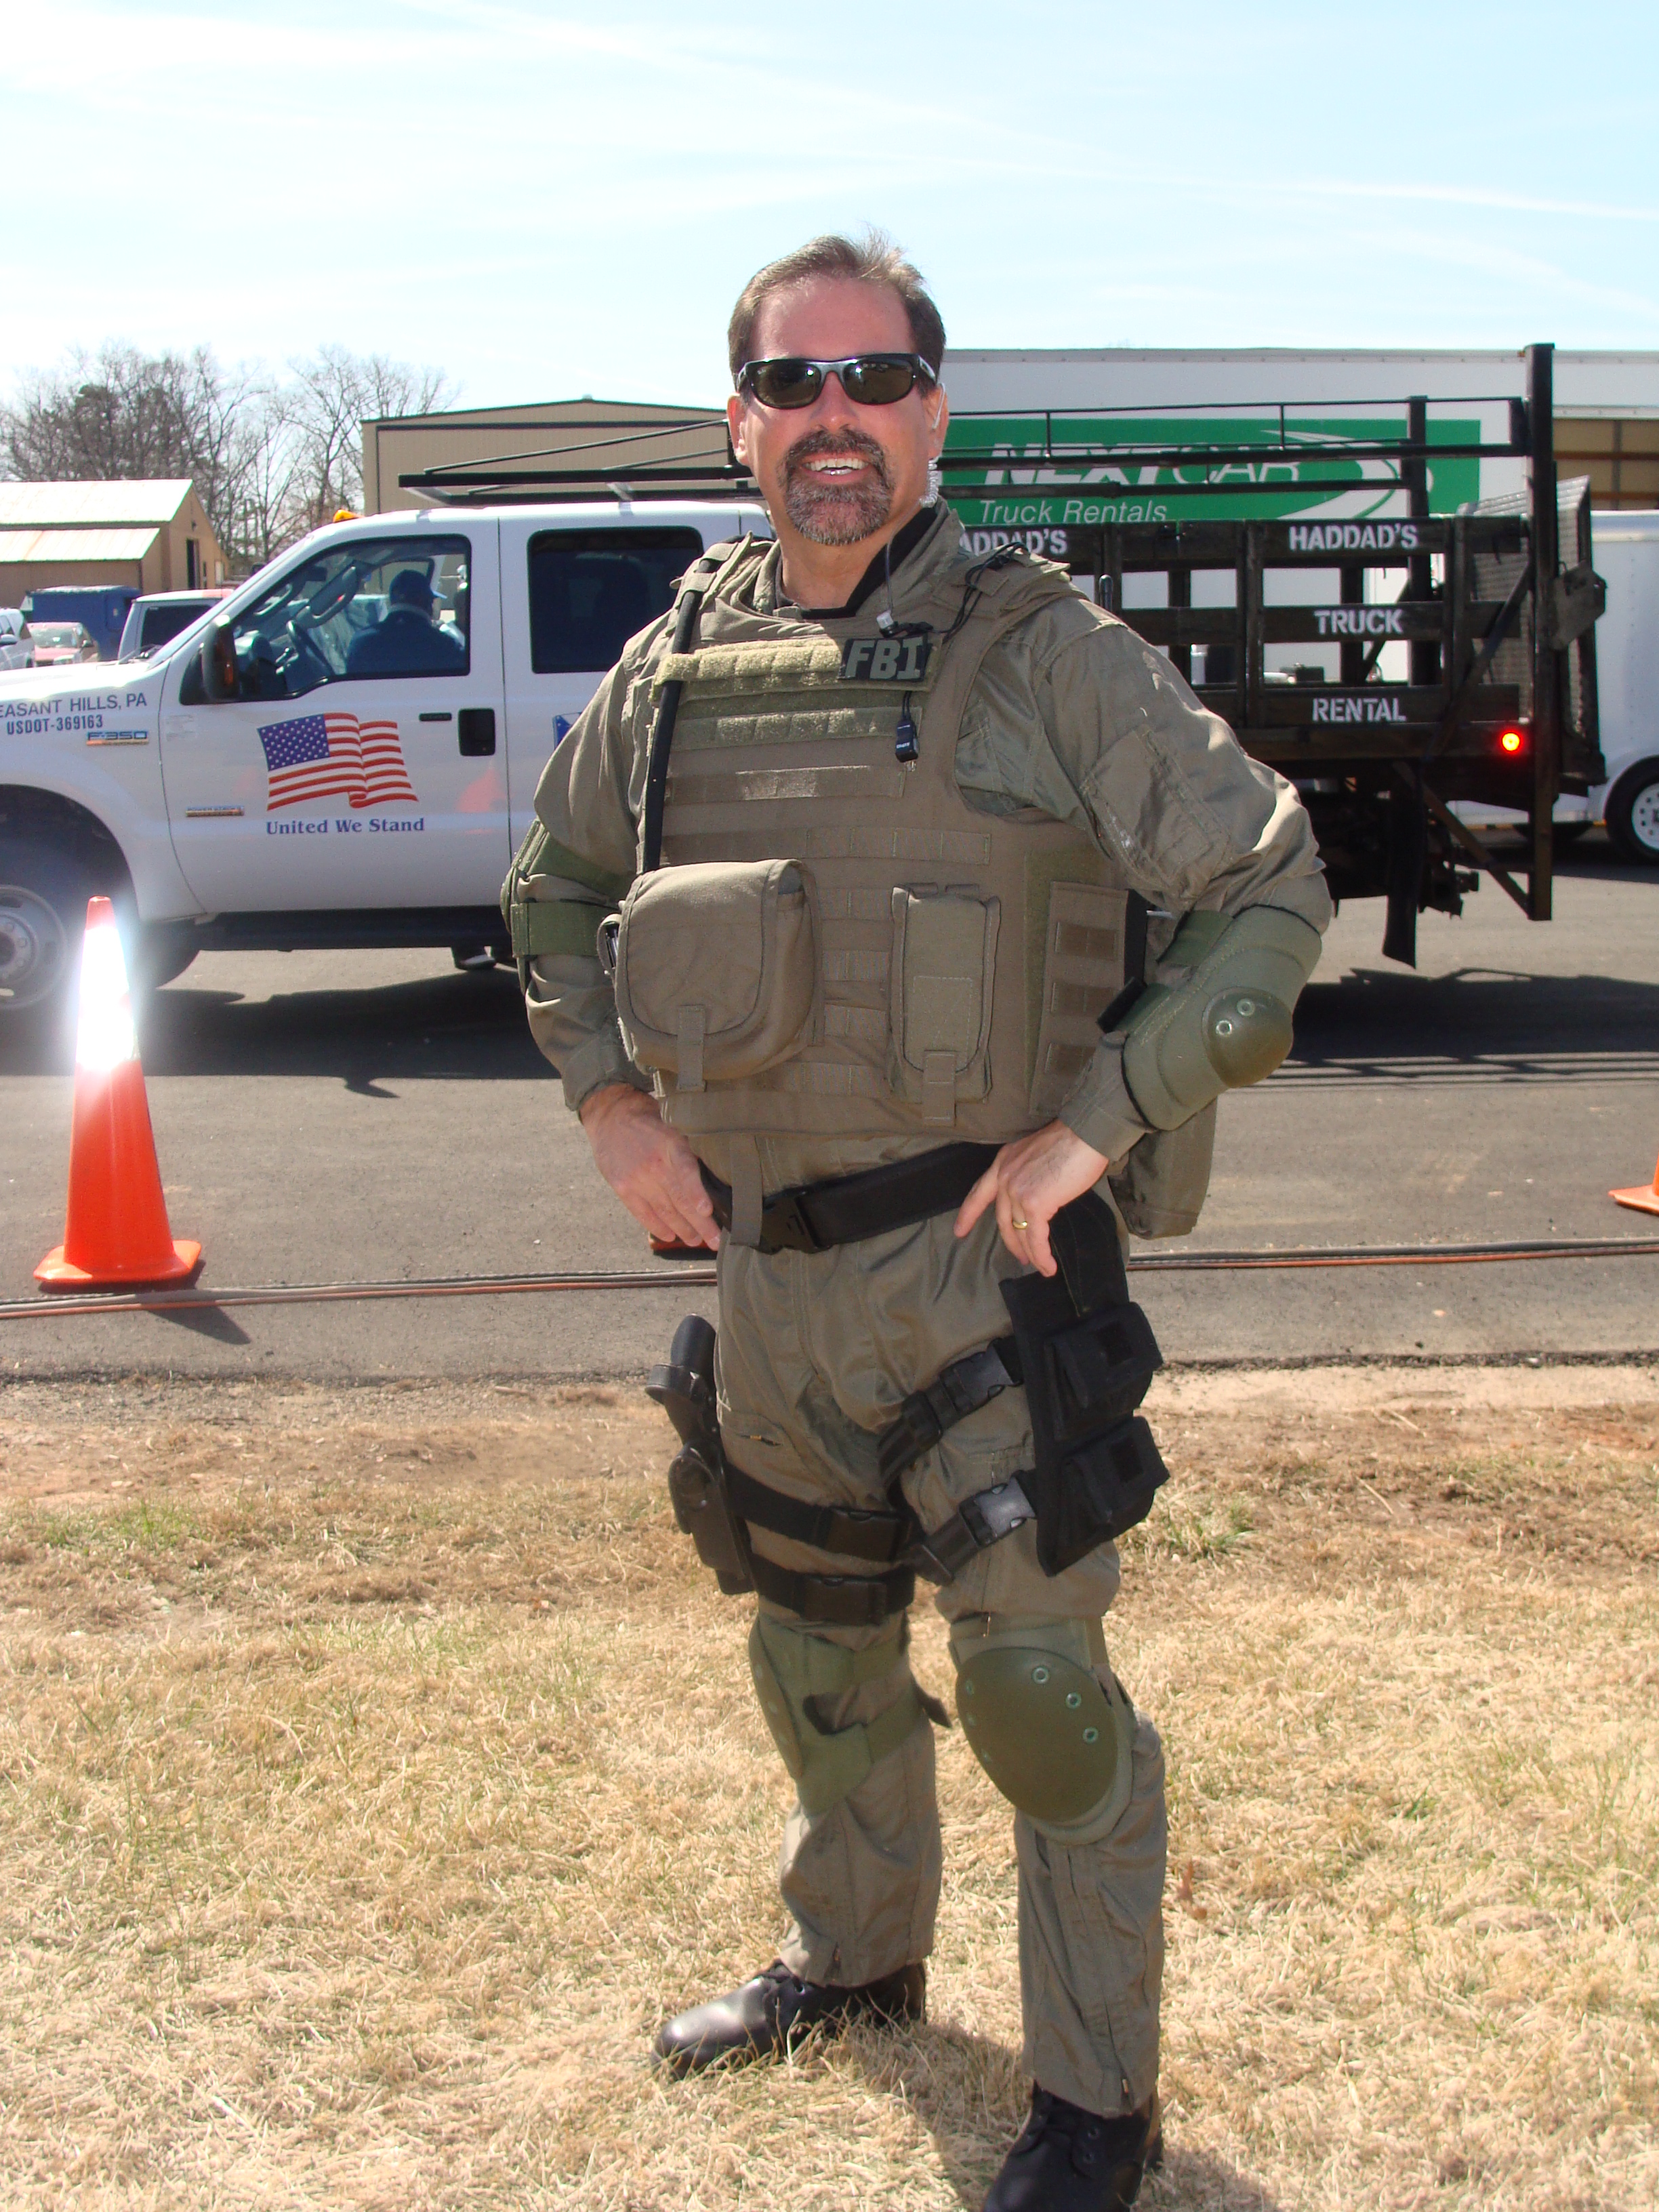 FBI SWAT Team Member Liam Ferguson Tv Pilot 